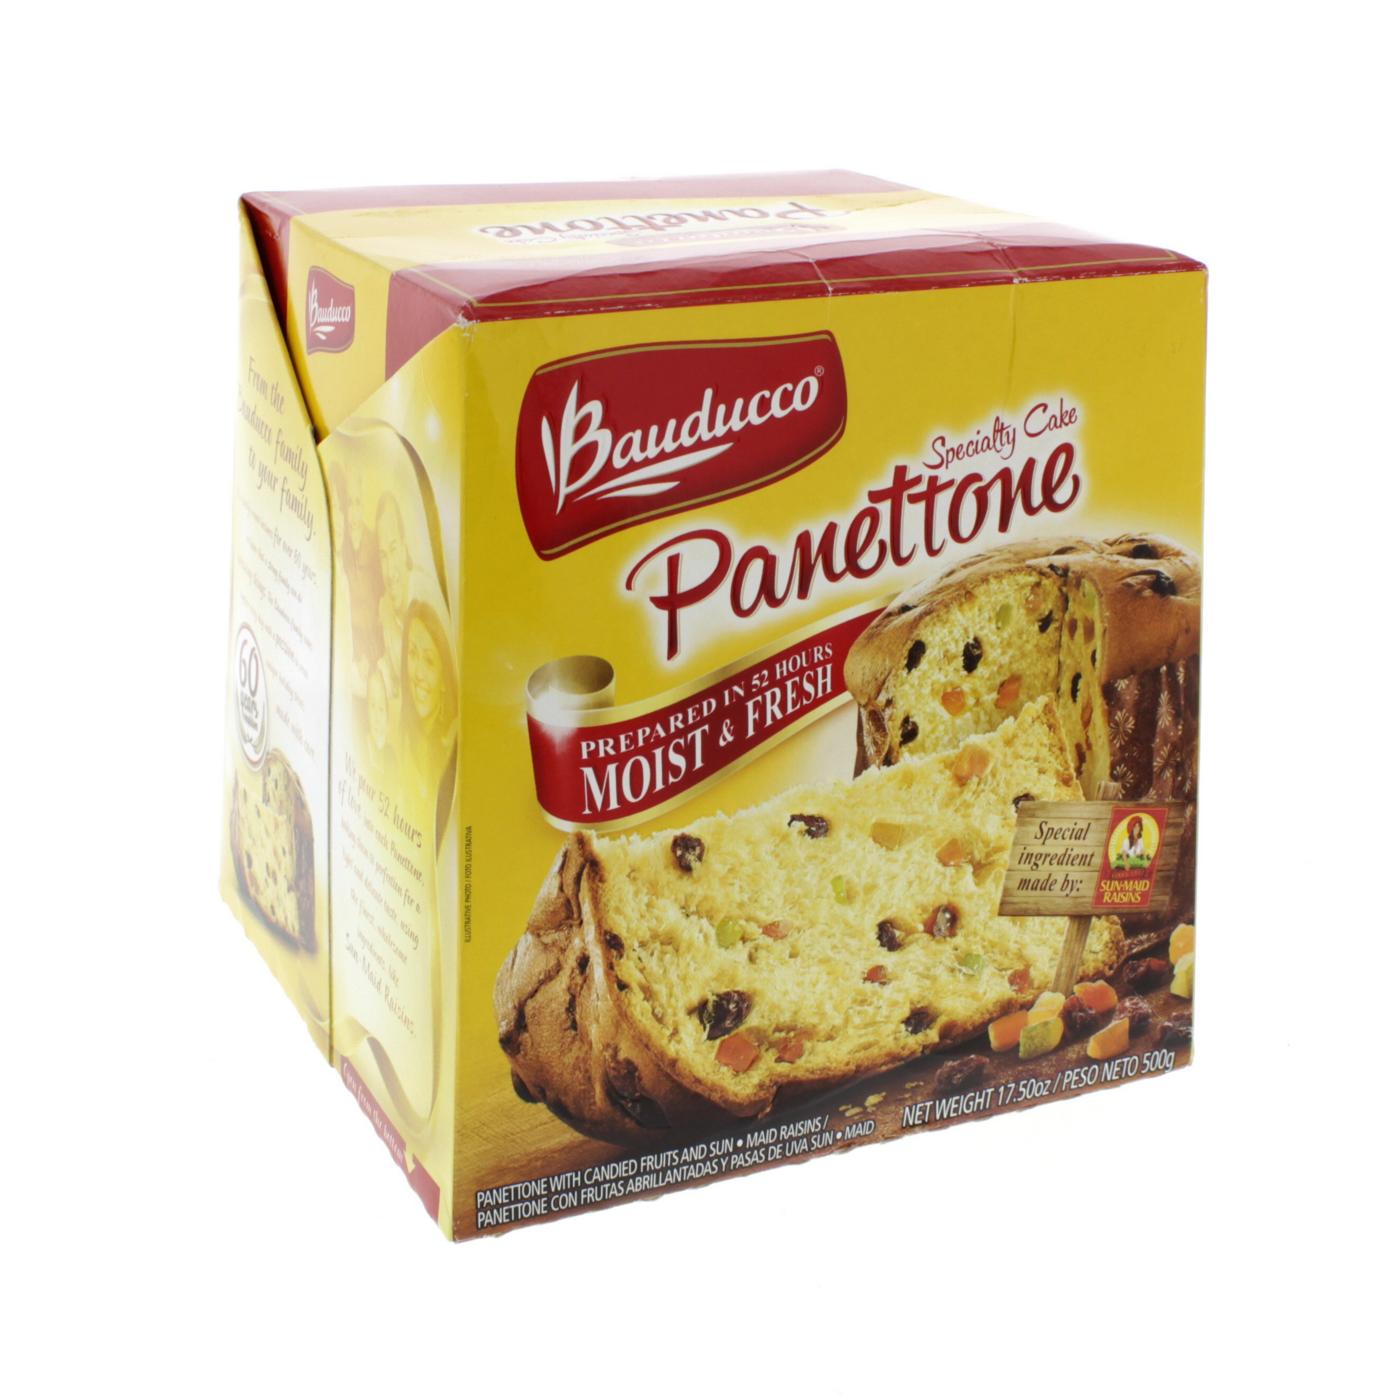 Bauducco Panettone Specialty Cake Sun-maid Raisin Bread; image 1 of 2